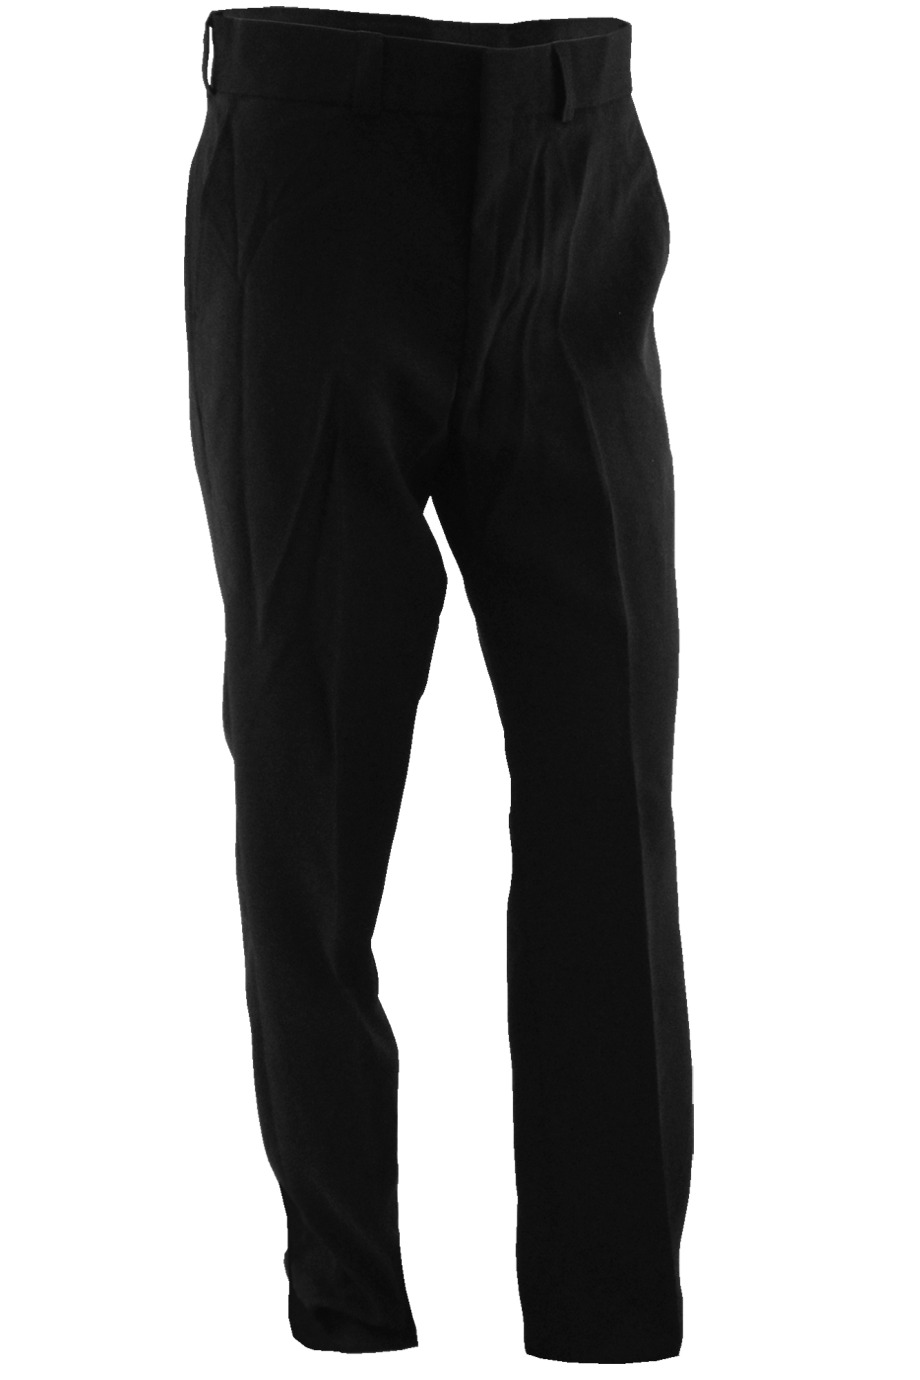 Edwards Garment 2595 - Men's Security Pant